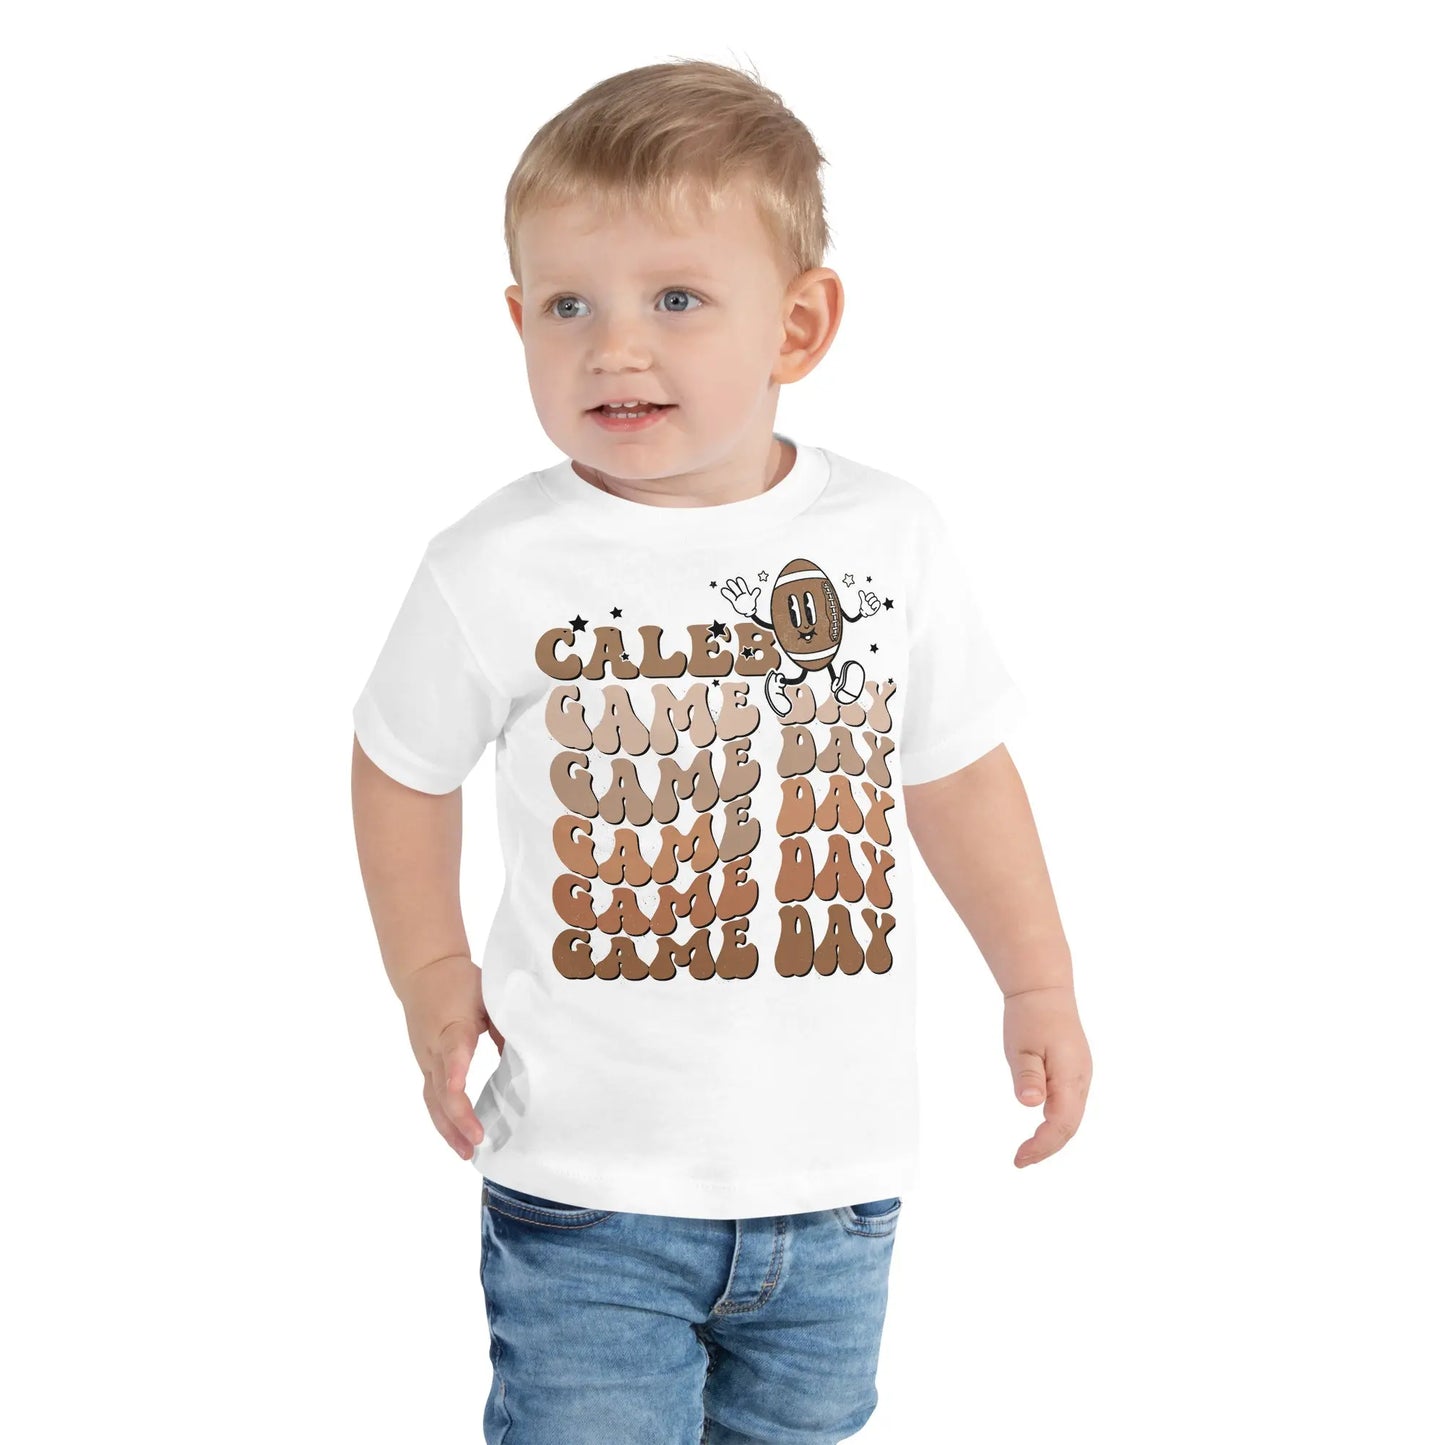 Football Game Day Toddler Shirt - Amazing Faith Designs